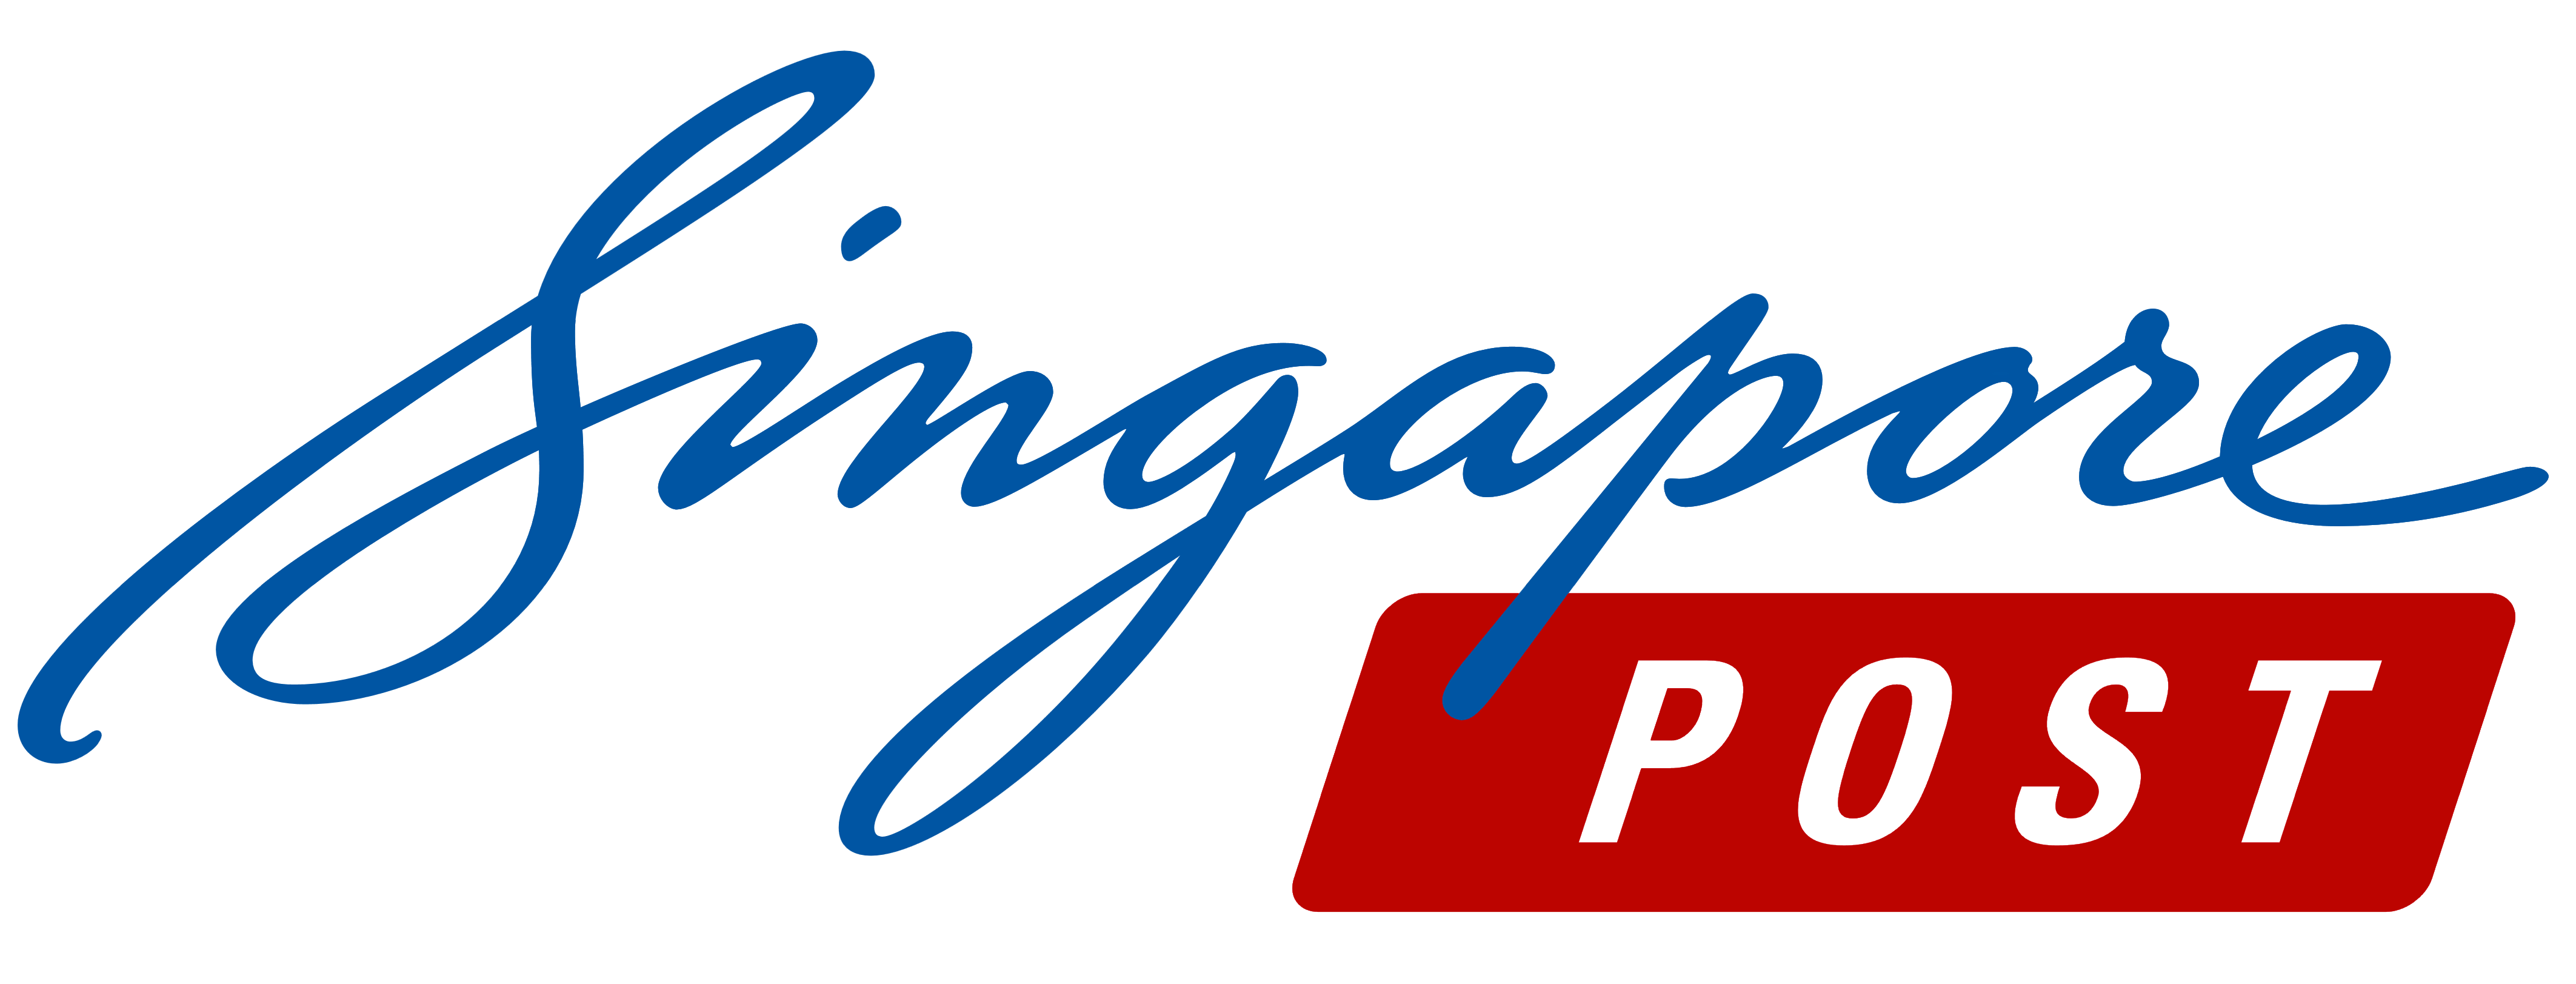 Singapore Post logo, logotype